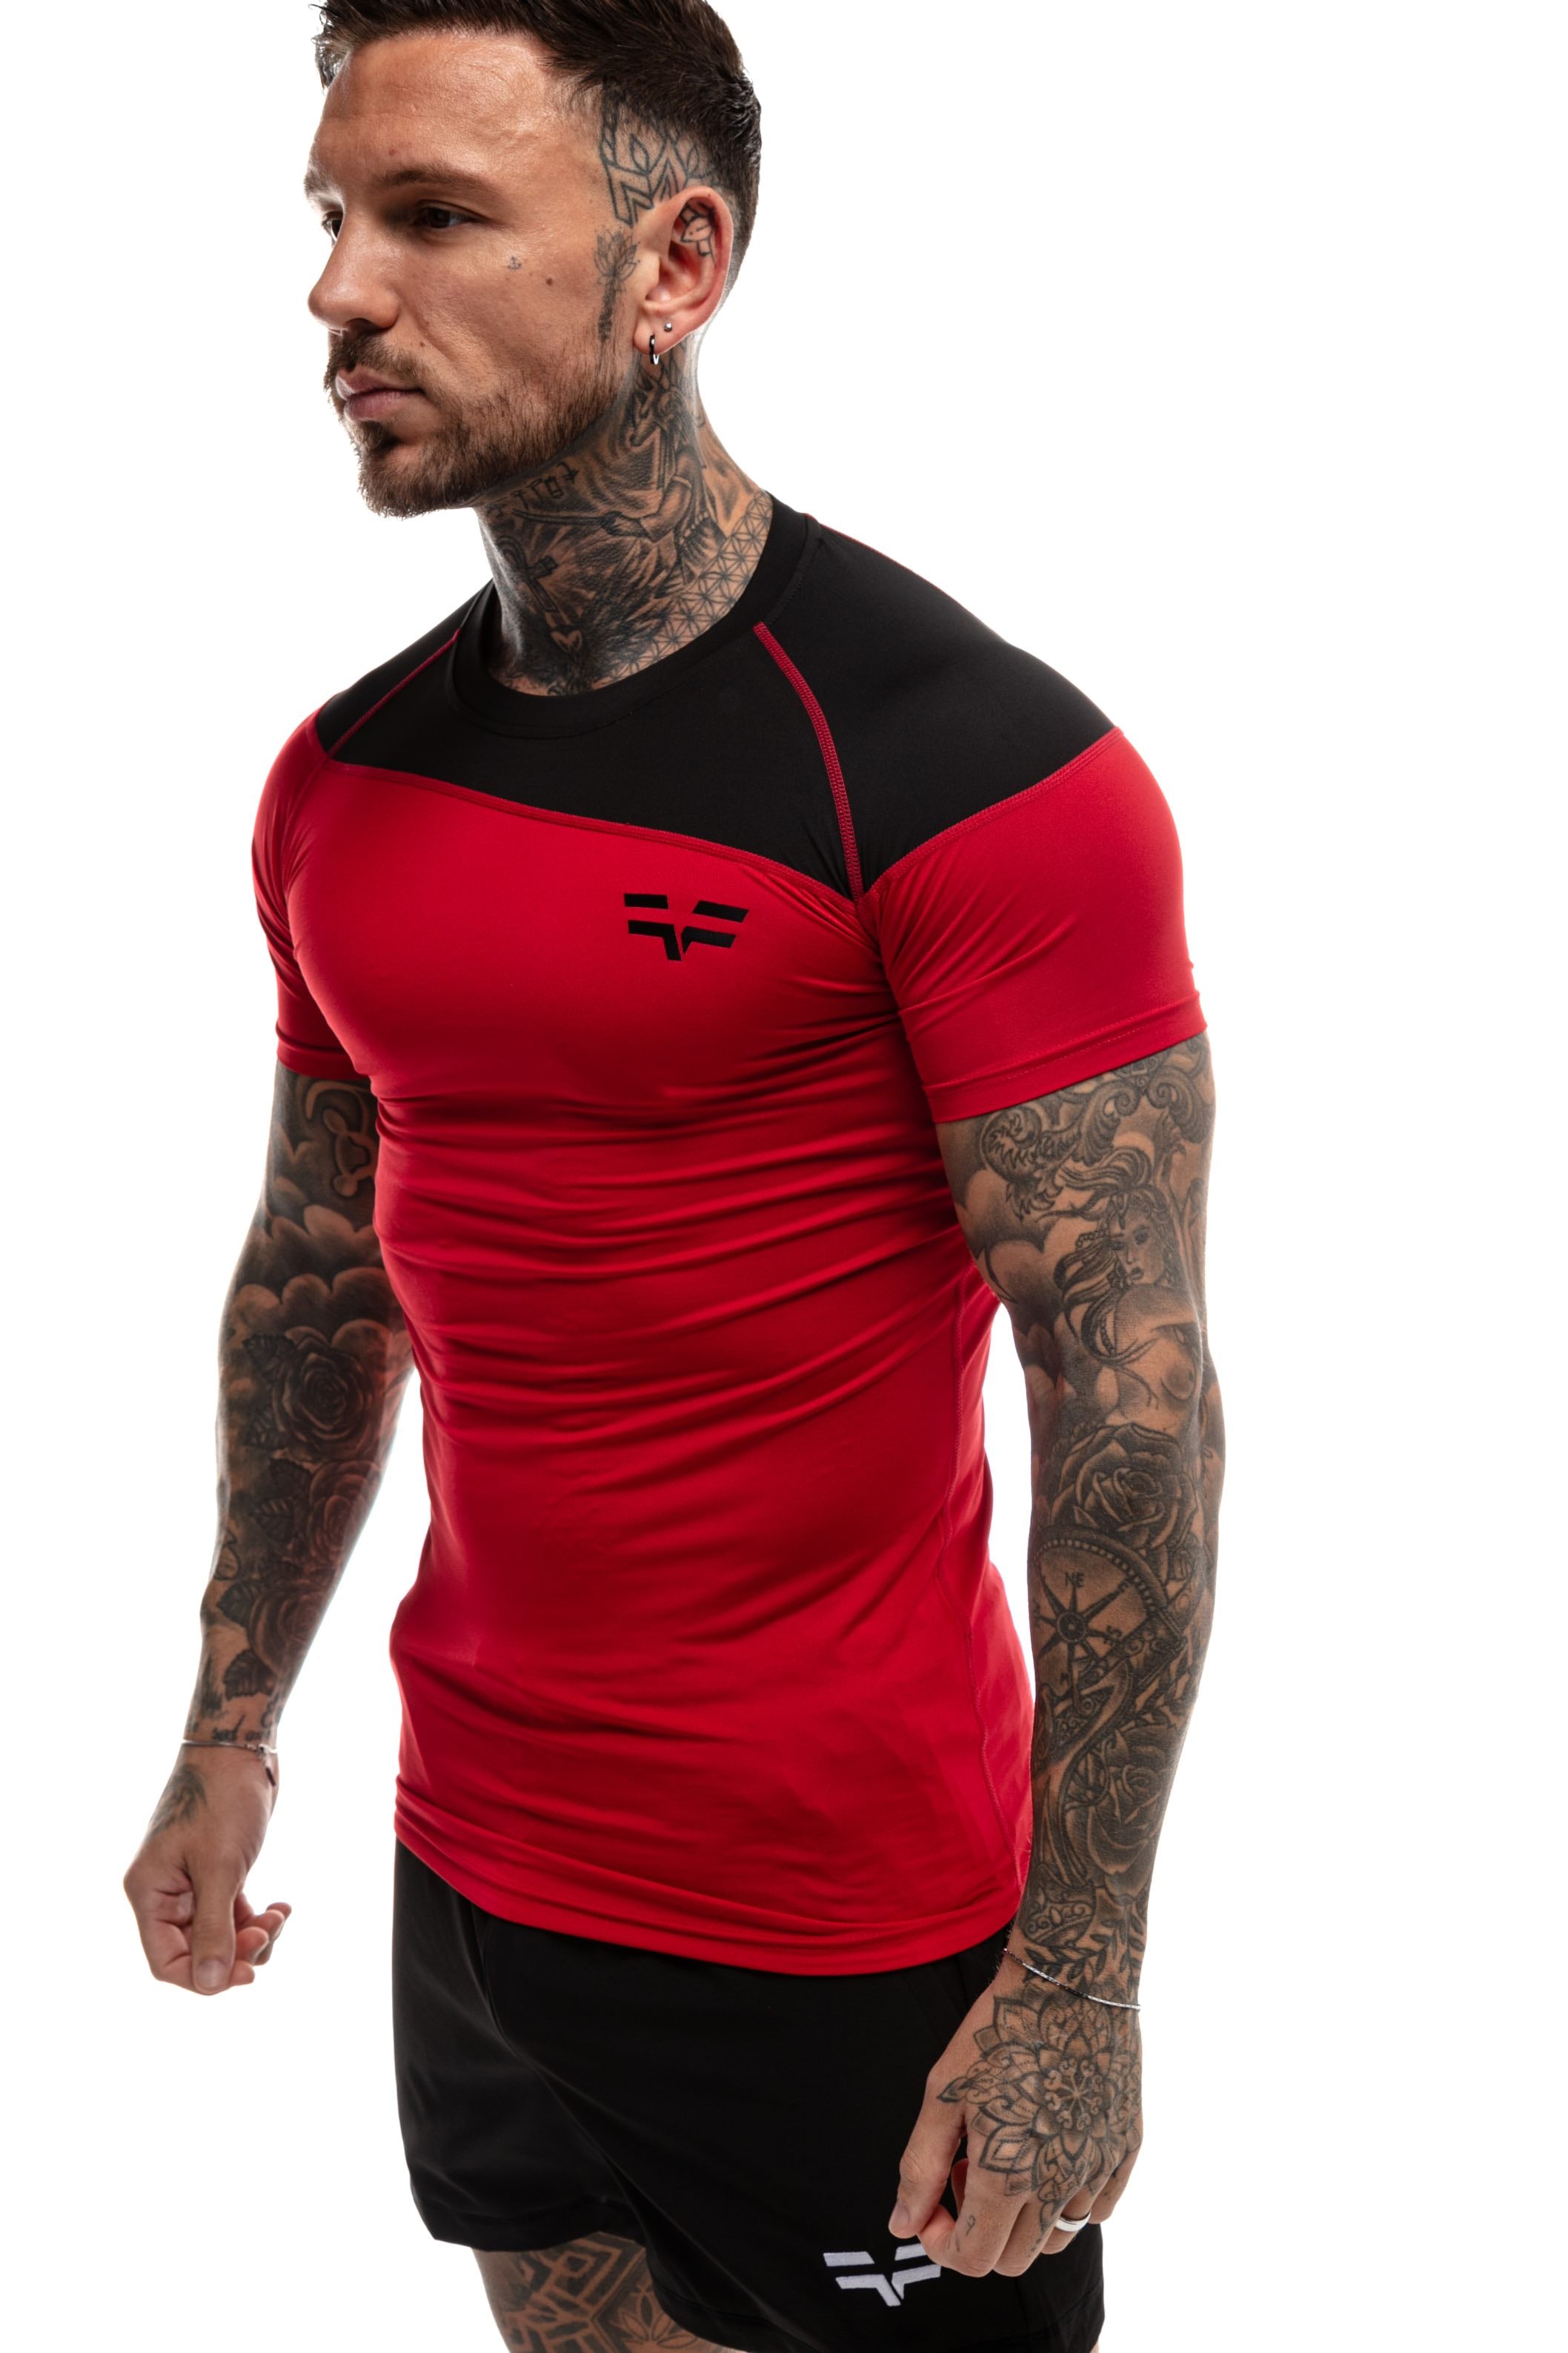 GymFreak Mens Pro T-Shirt - Red/Black